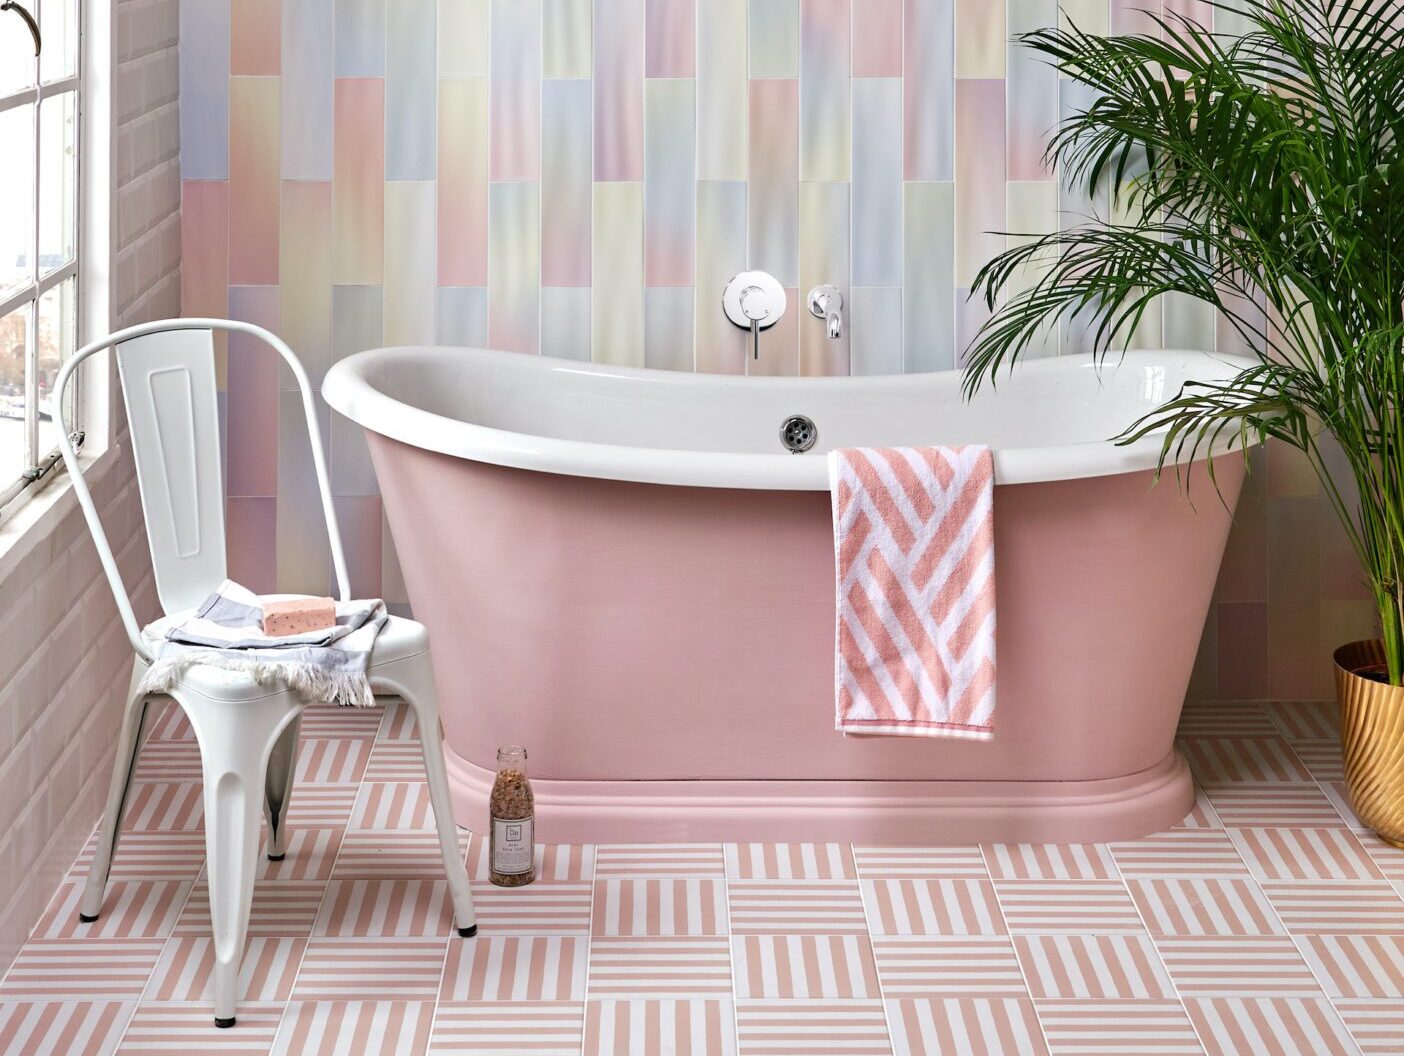 Ca' Pietra Deck Chair Rose bathroom tiles